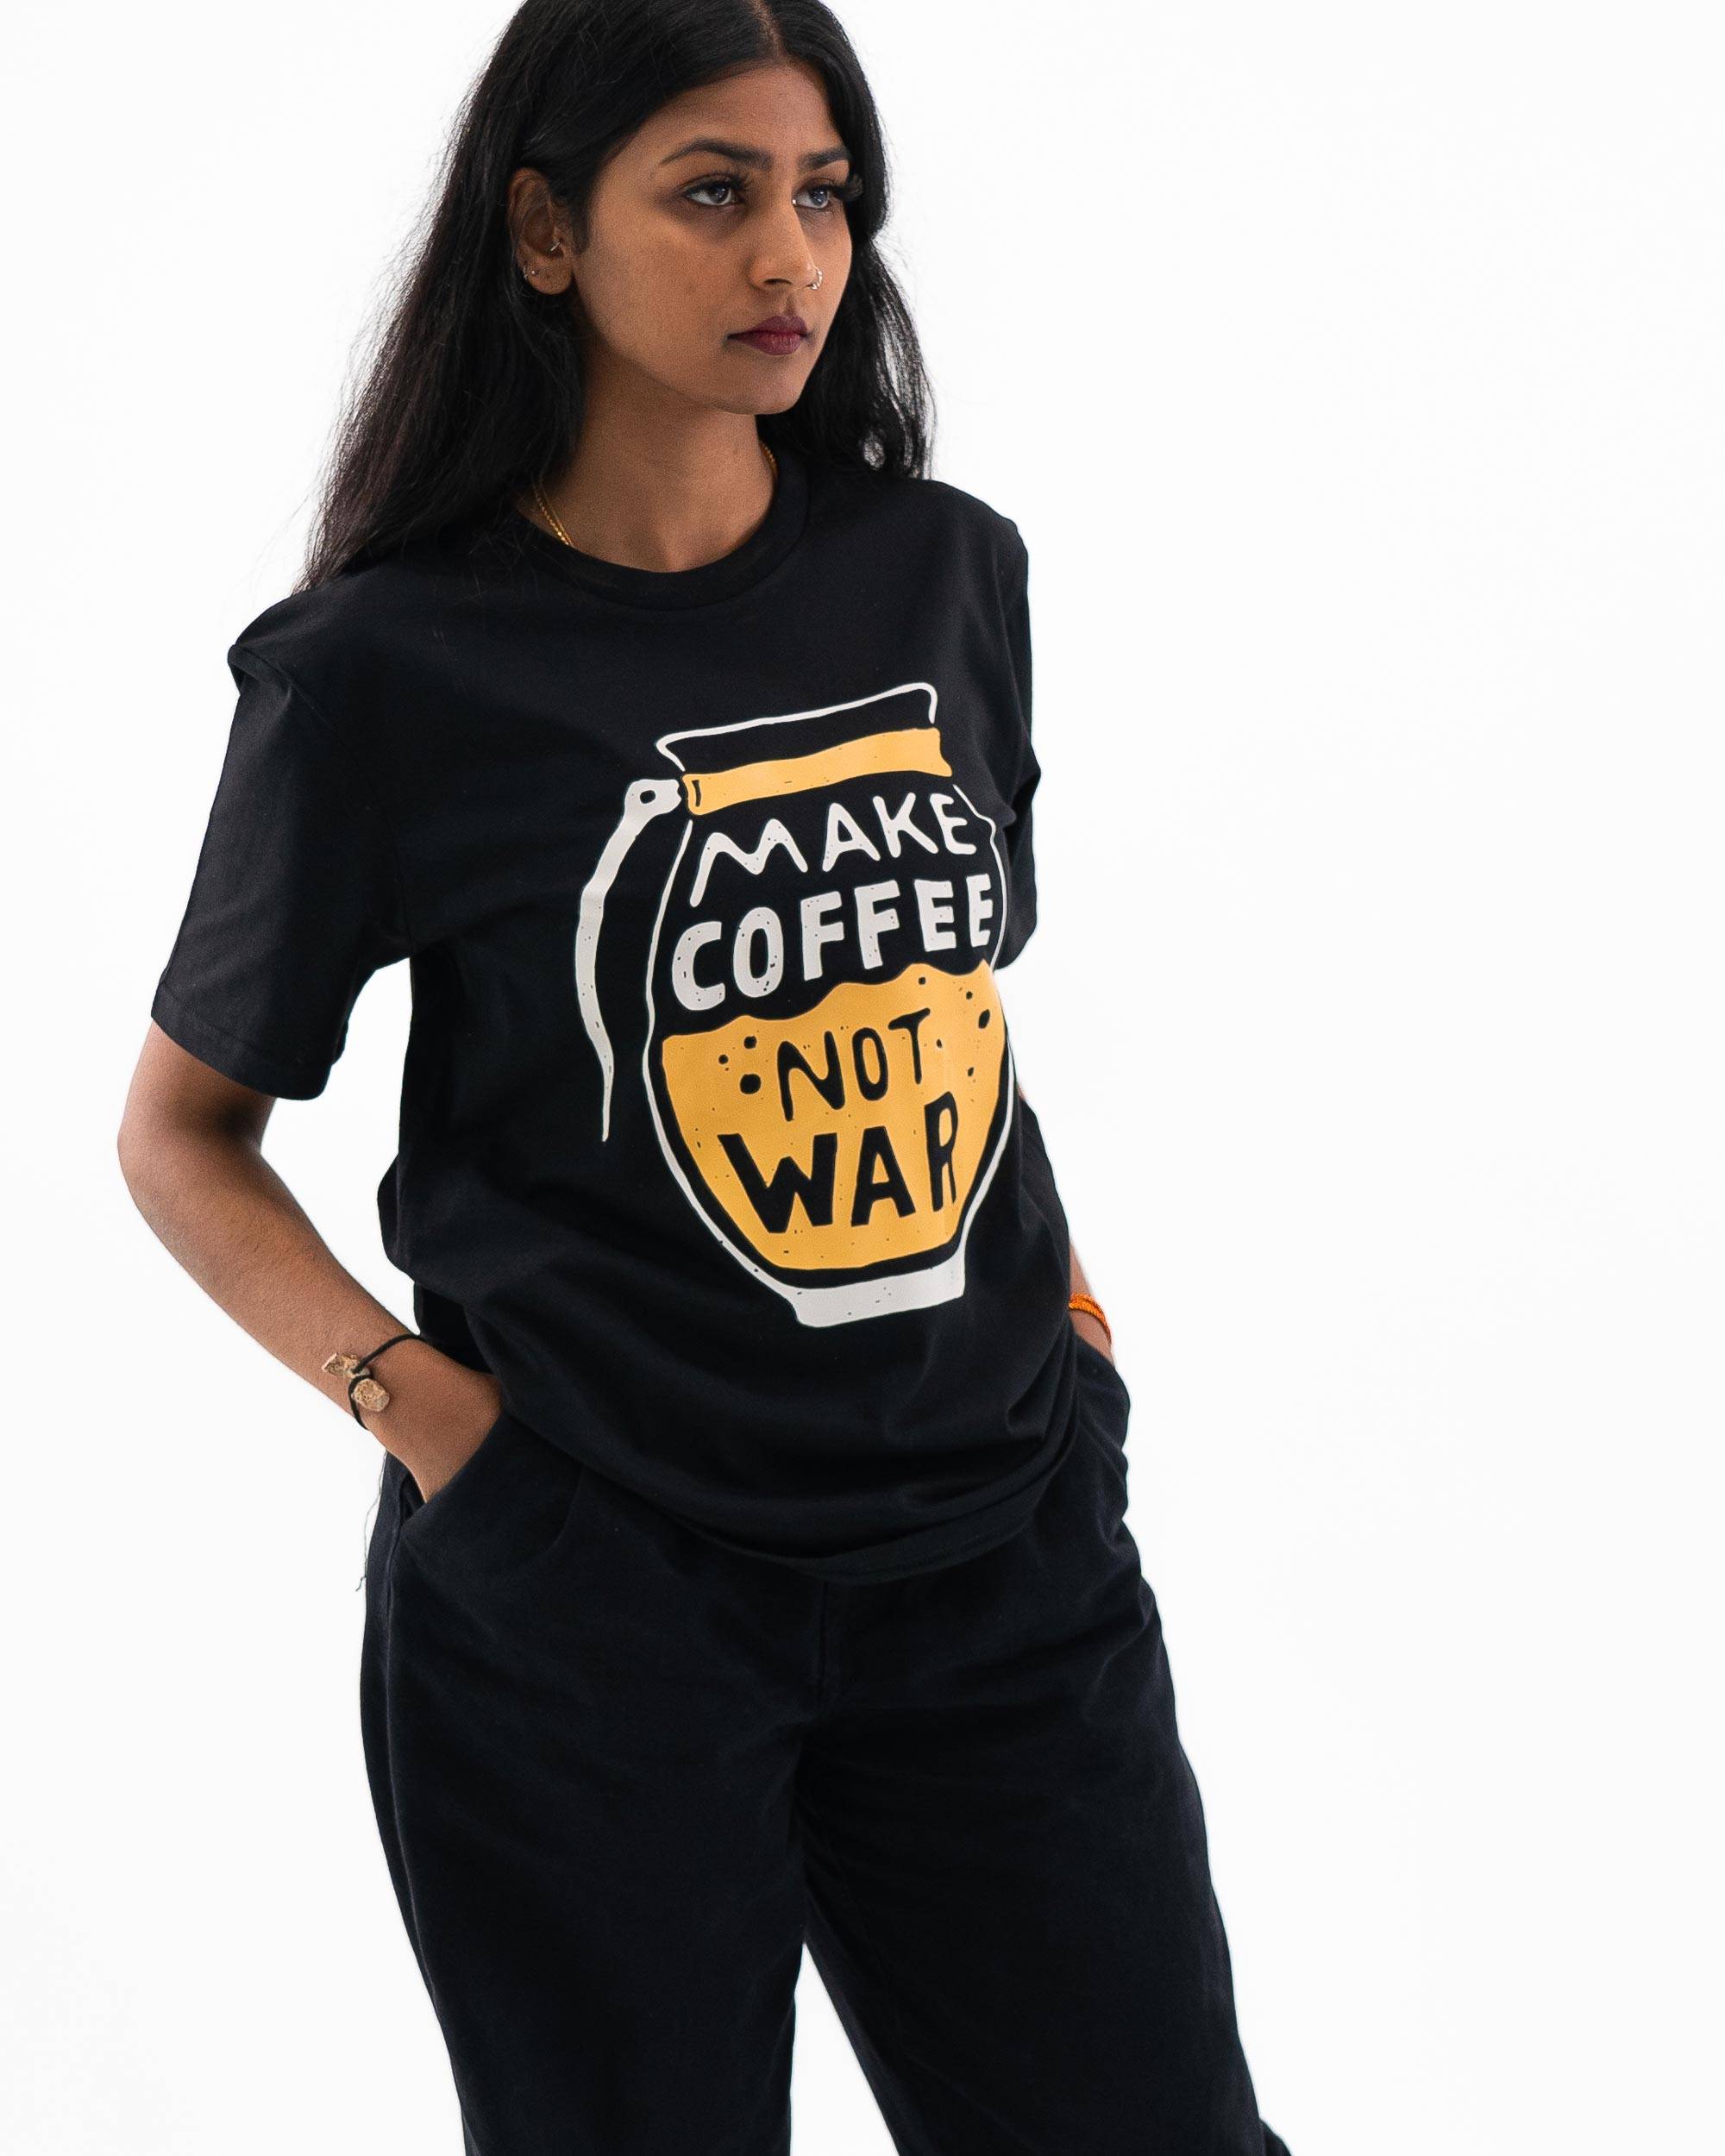 T-shirt Make Coffee Not War de couleur Noir par Skitchism